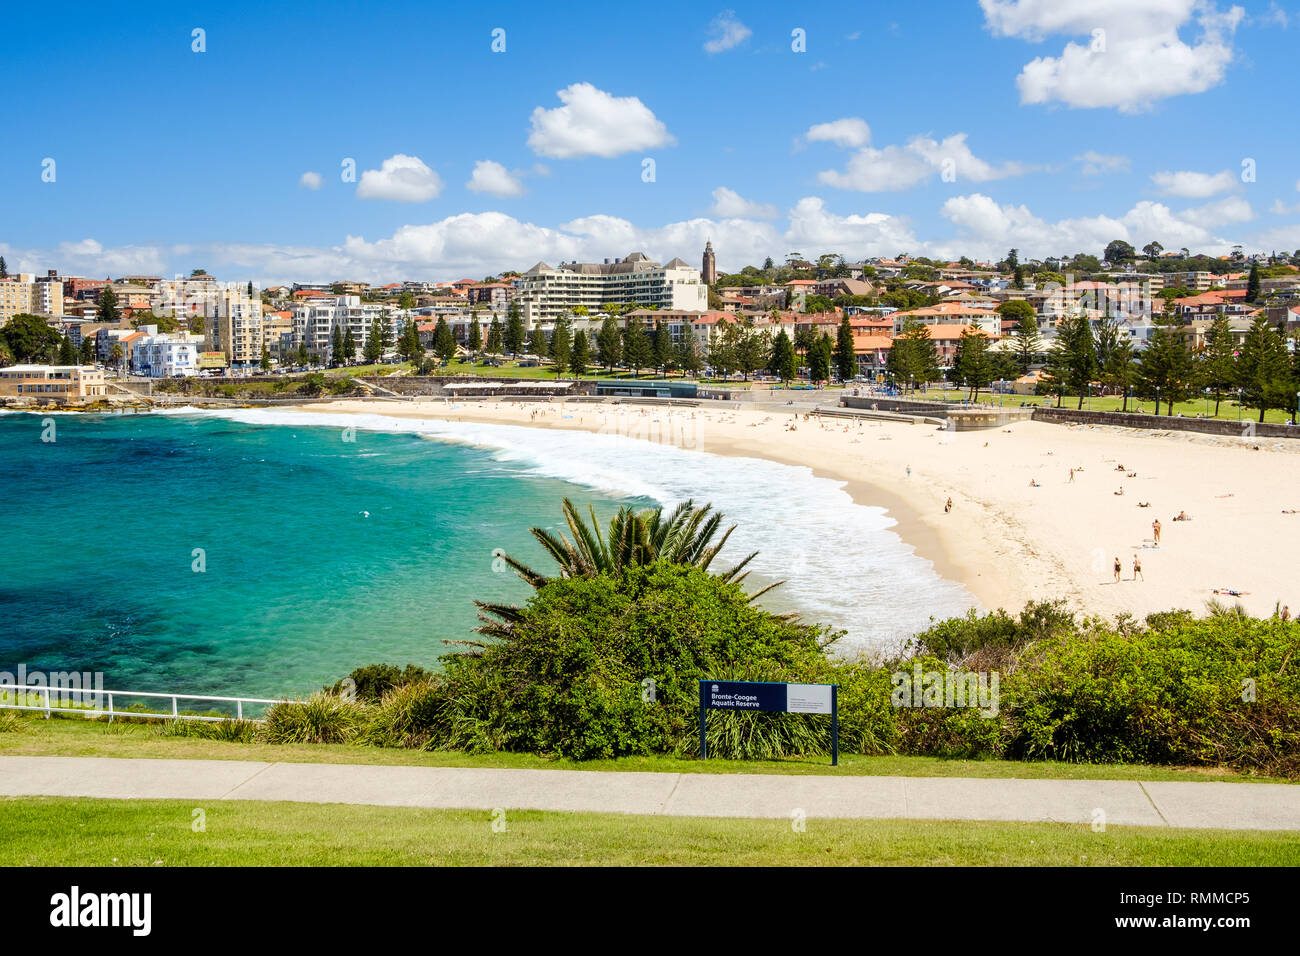 Landscape image of Coogee Beach in Sydney, Australia Stock Photo